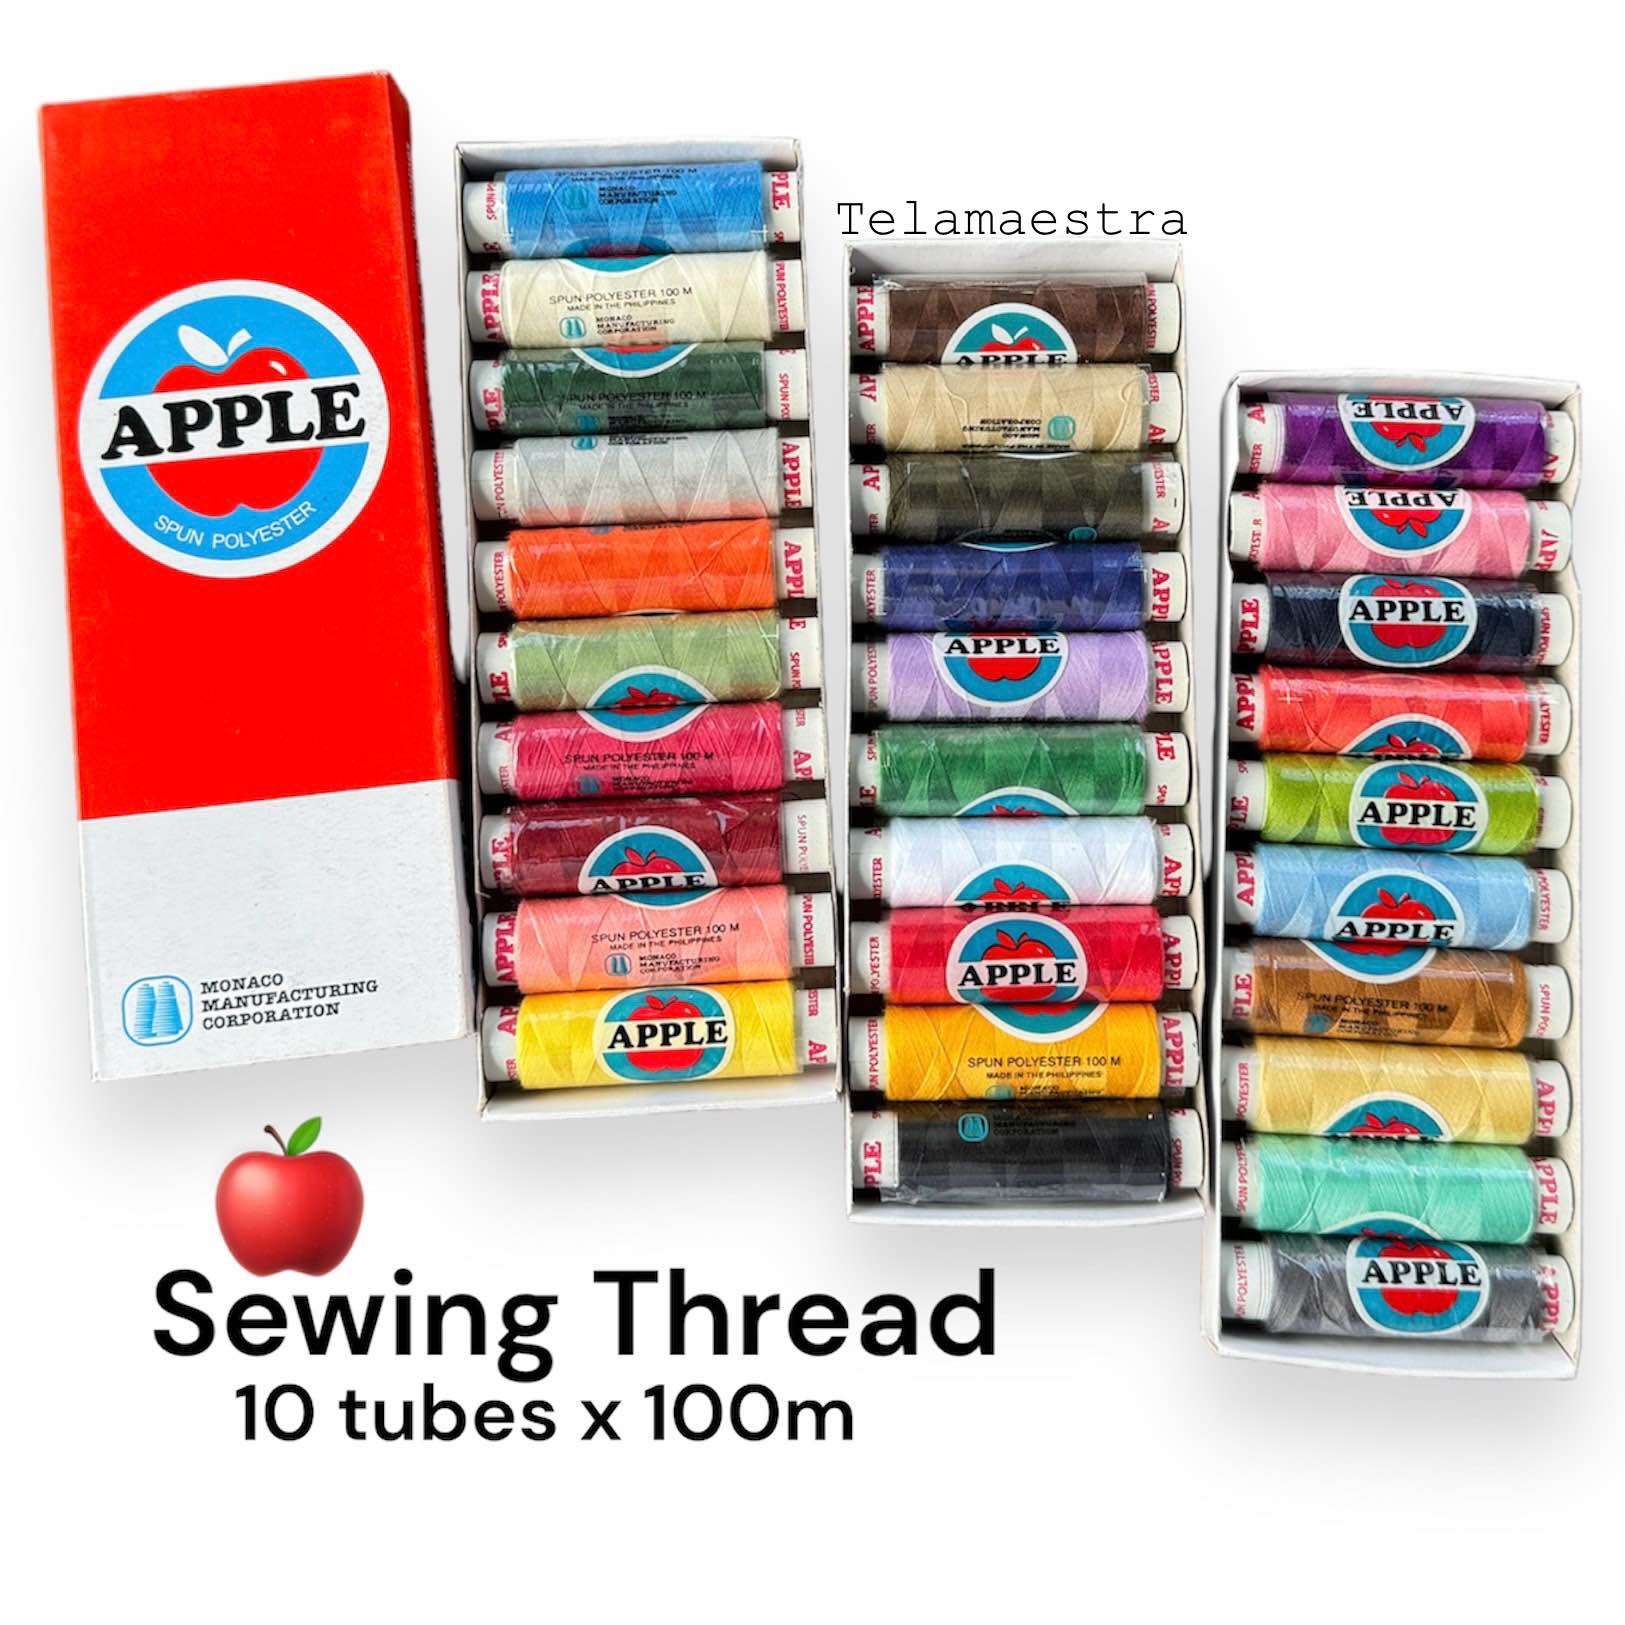 Apple thread Sewing Sinulid 100m 10tubes/box